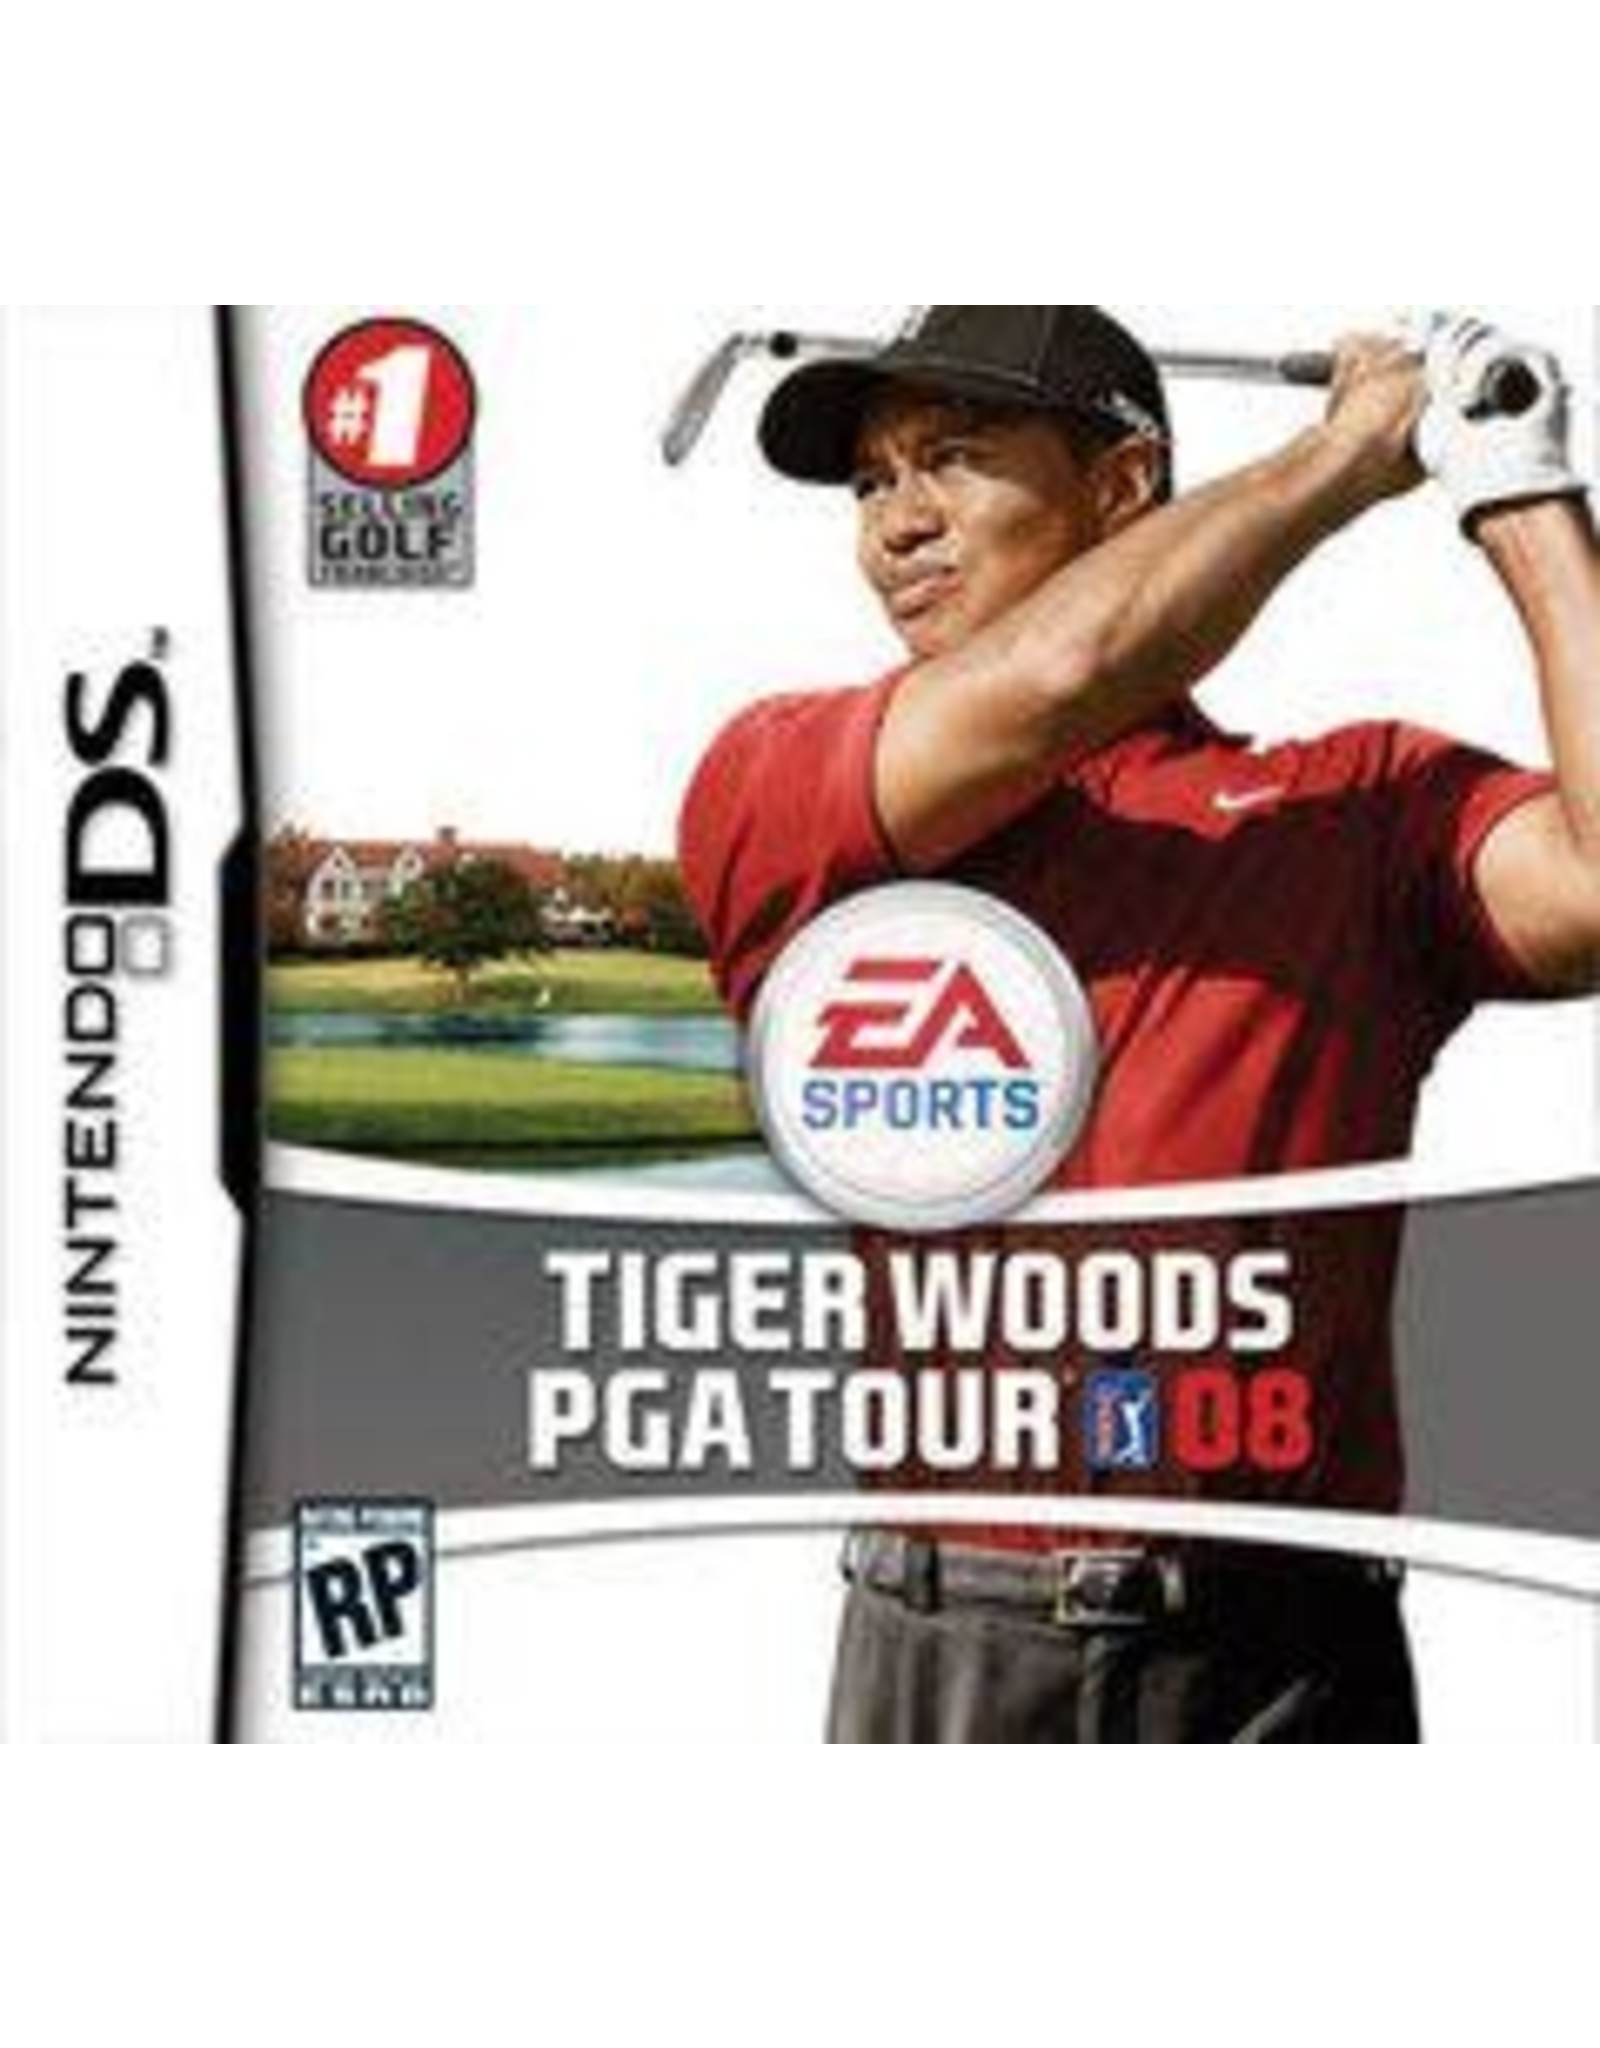 Nintendo DS Tiger Woods PGA Tour 08 (CiB)